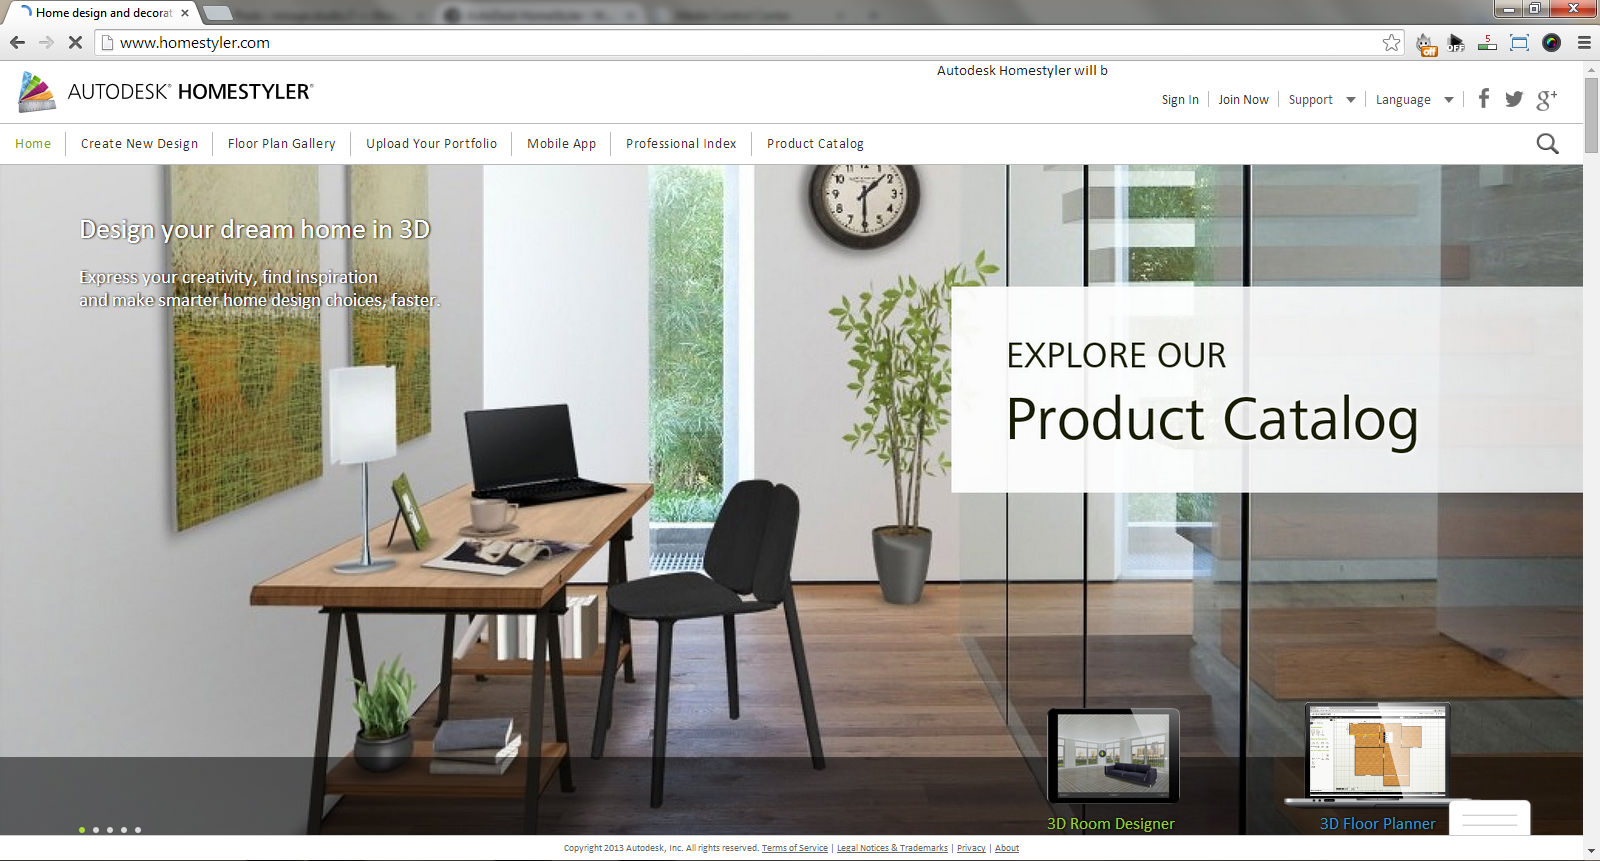 Architecture Home Design Software on Autodesk Homestyler     Web Based Interior Design Software